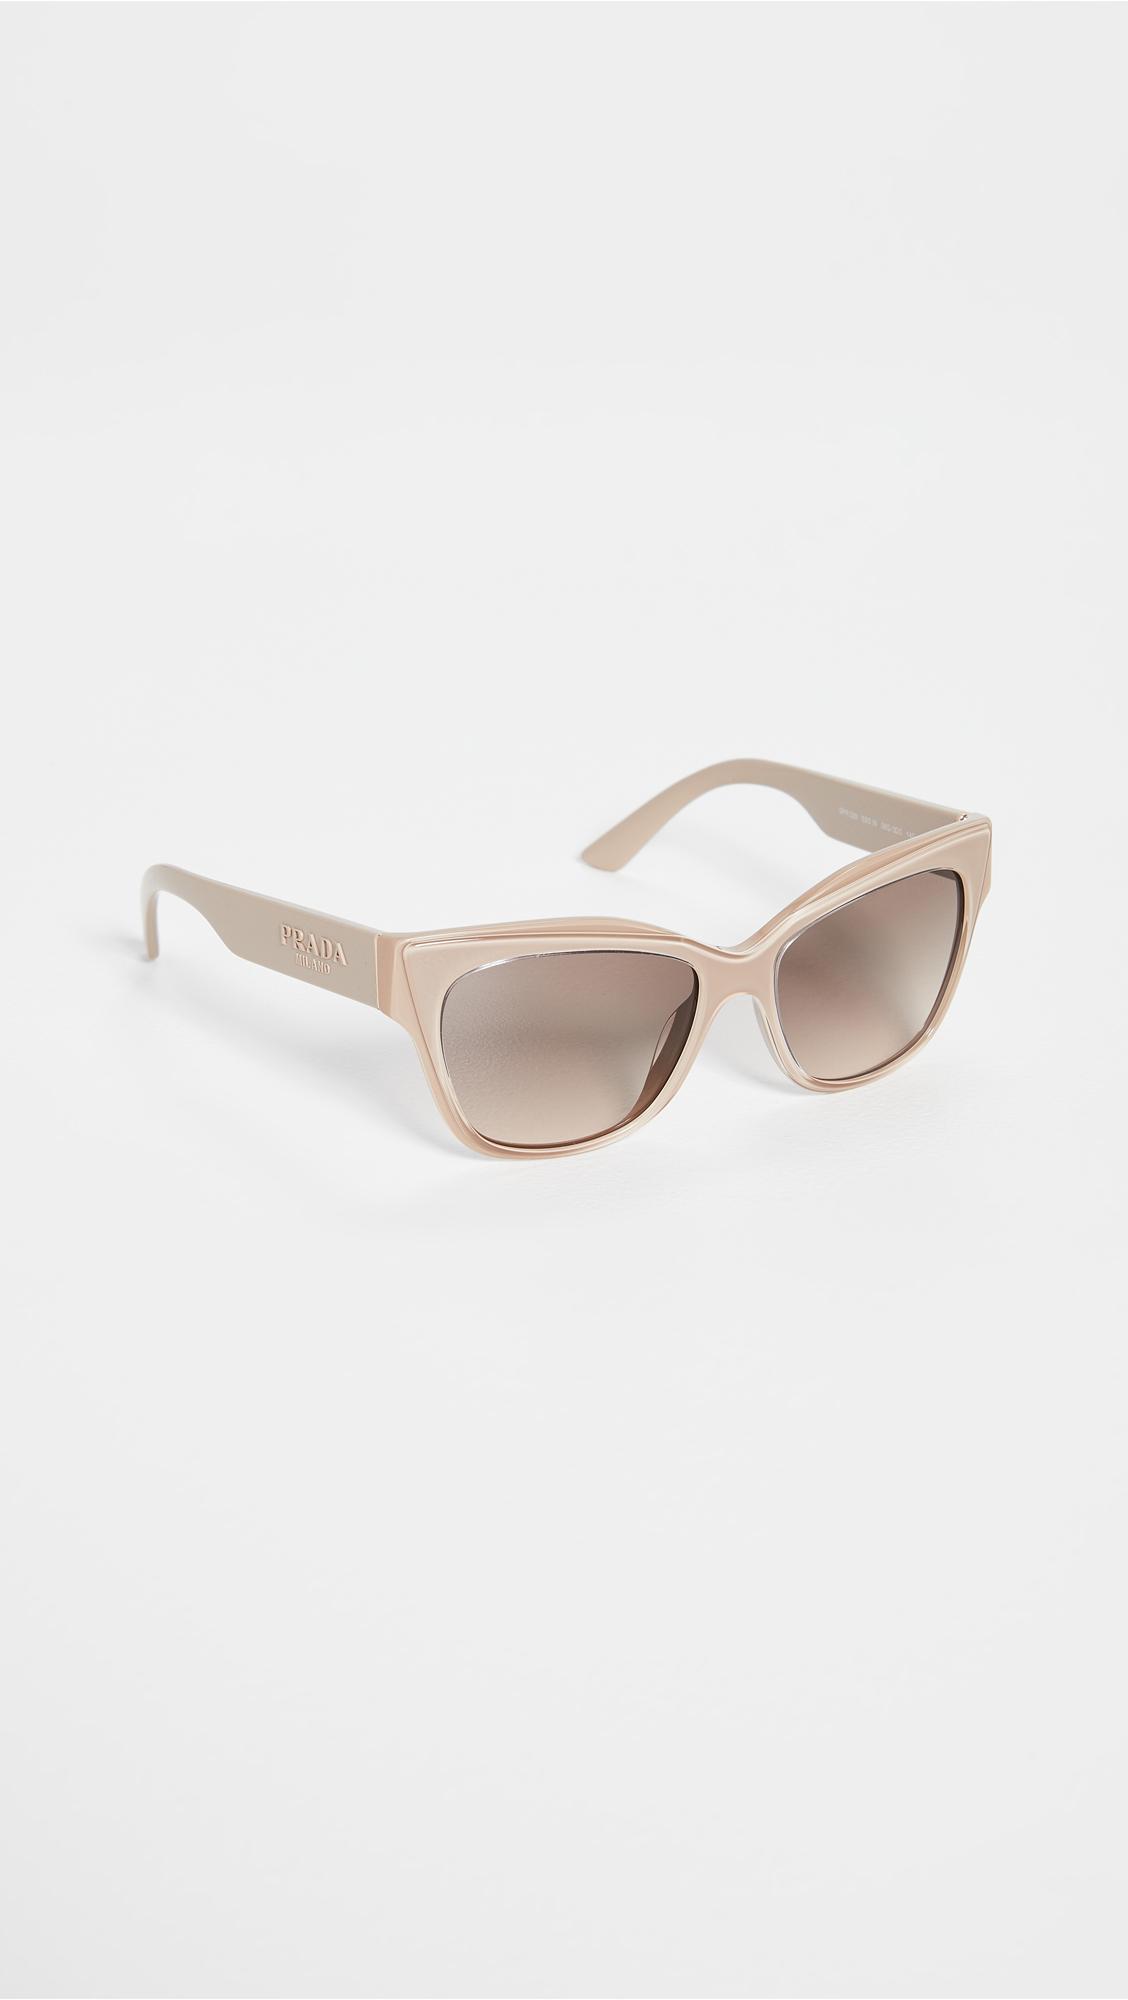 Prada Monochrome Logo Classic Sunglasses in Light Brown (Brown) - Lyst